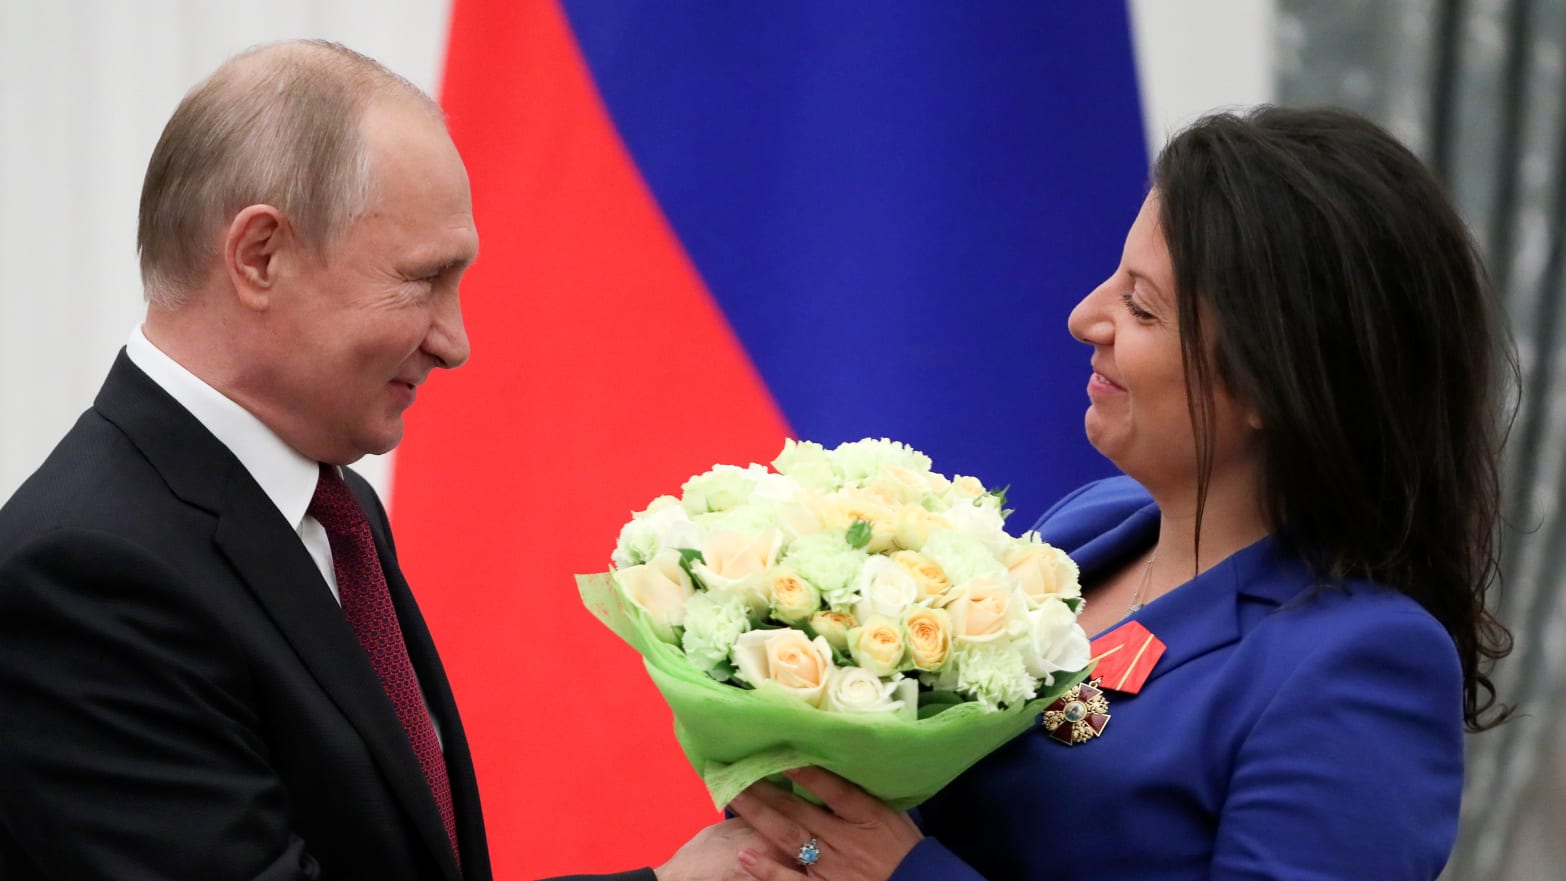 image: Margarita Simonyan receiving a bouquet of flowers from Vladimir Putin